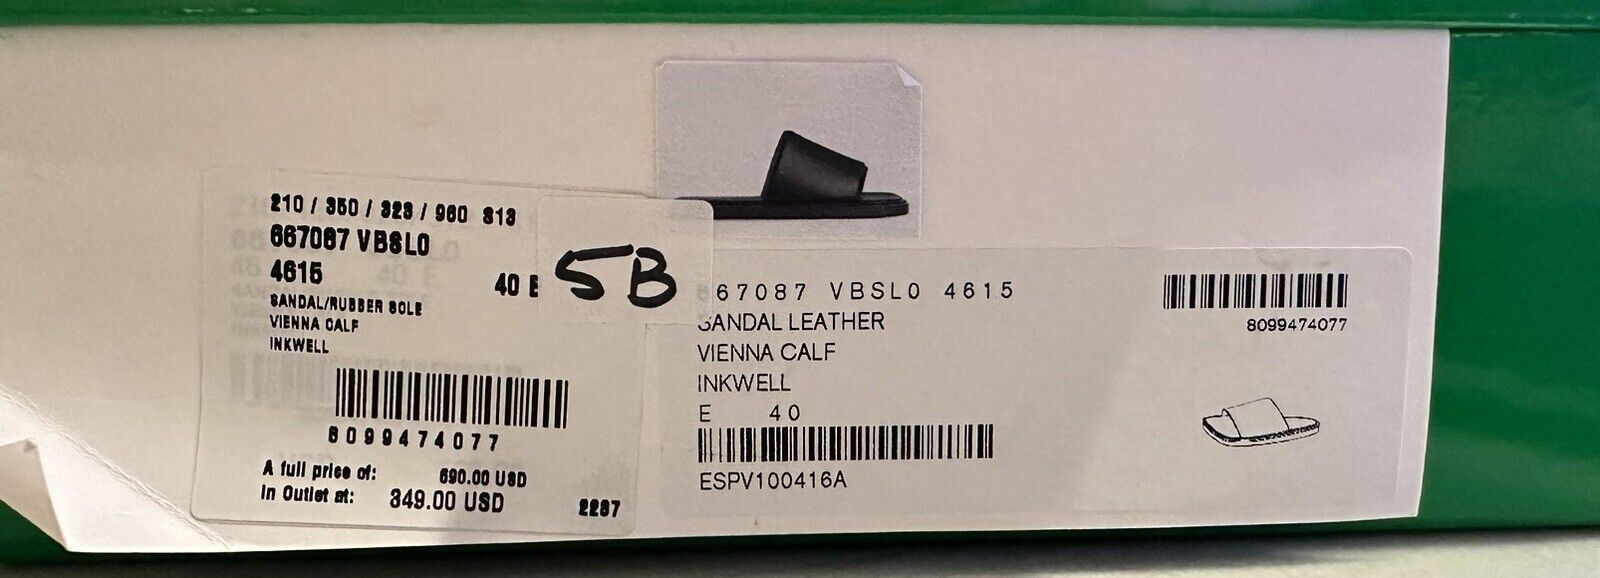 NIB $ 690 Bottega Veneta Herren-Sandalen aus Wiener Kalbsleder, Inkwell 7 US 667087